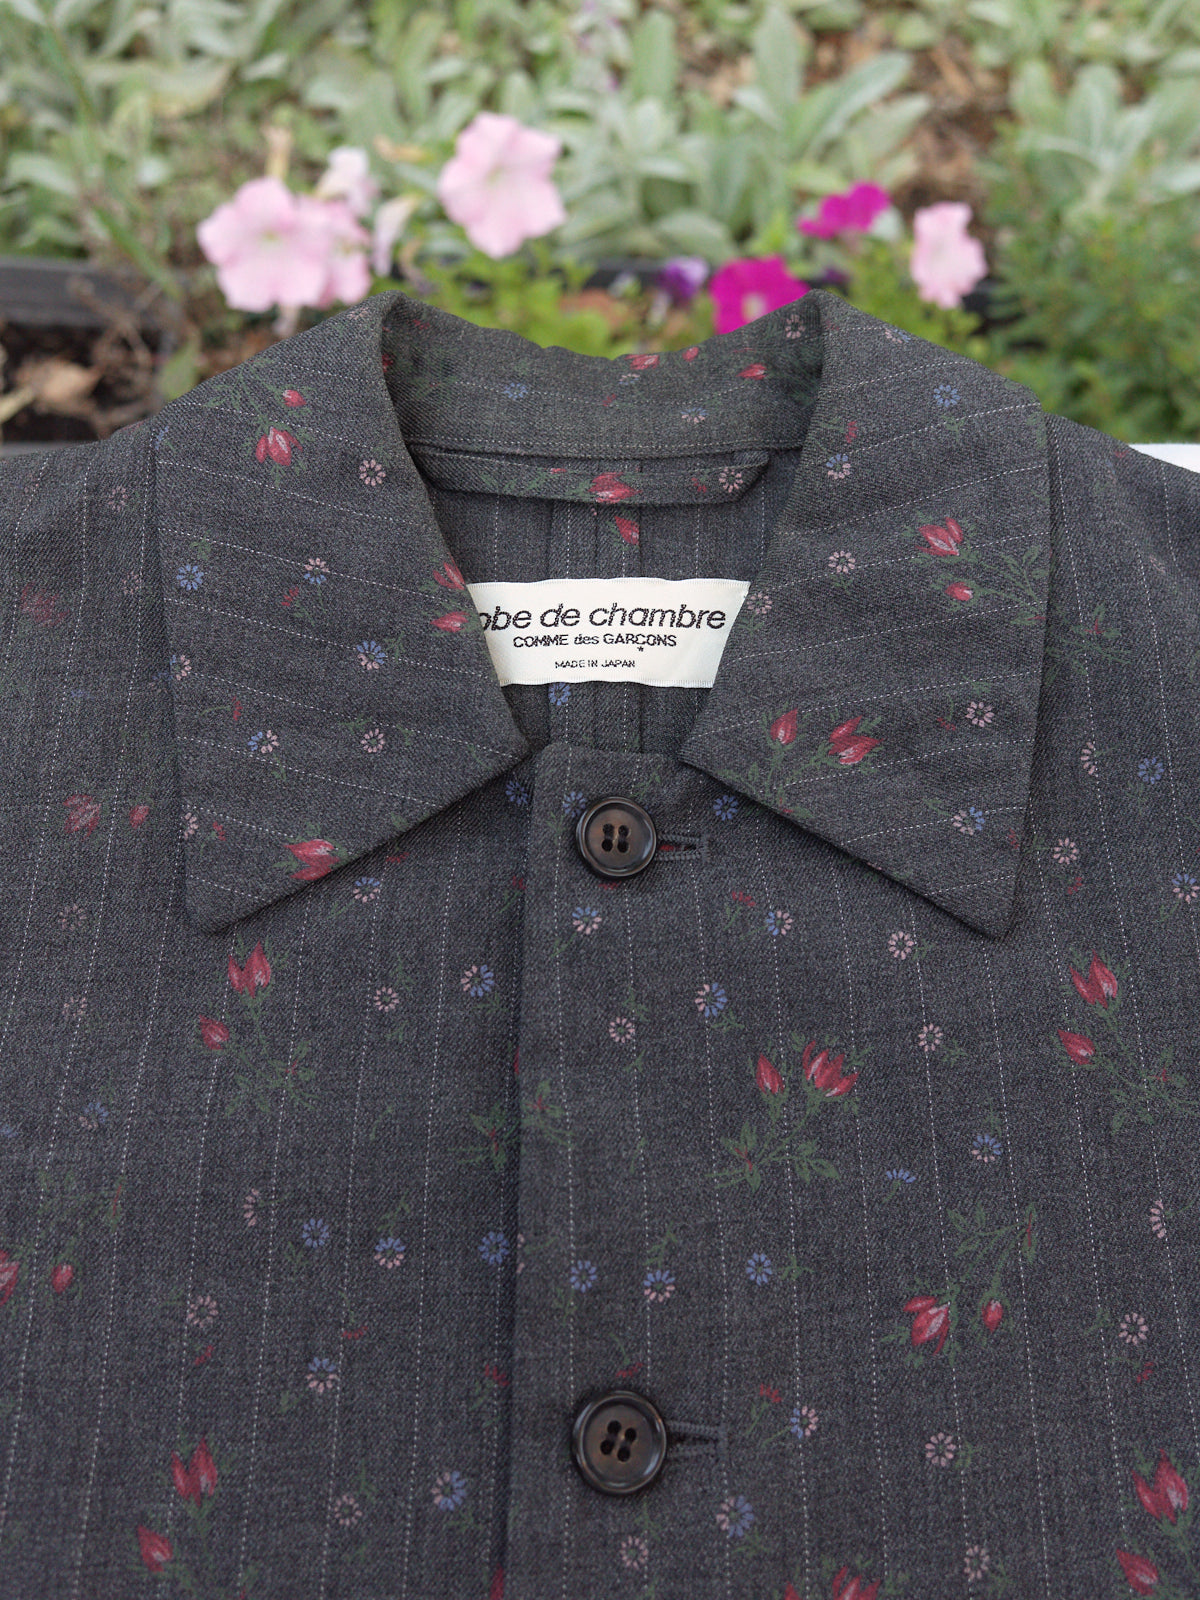 Robe de Chambre Comme des Garcons 1993 grey wool stripe floral print jacket  M S